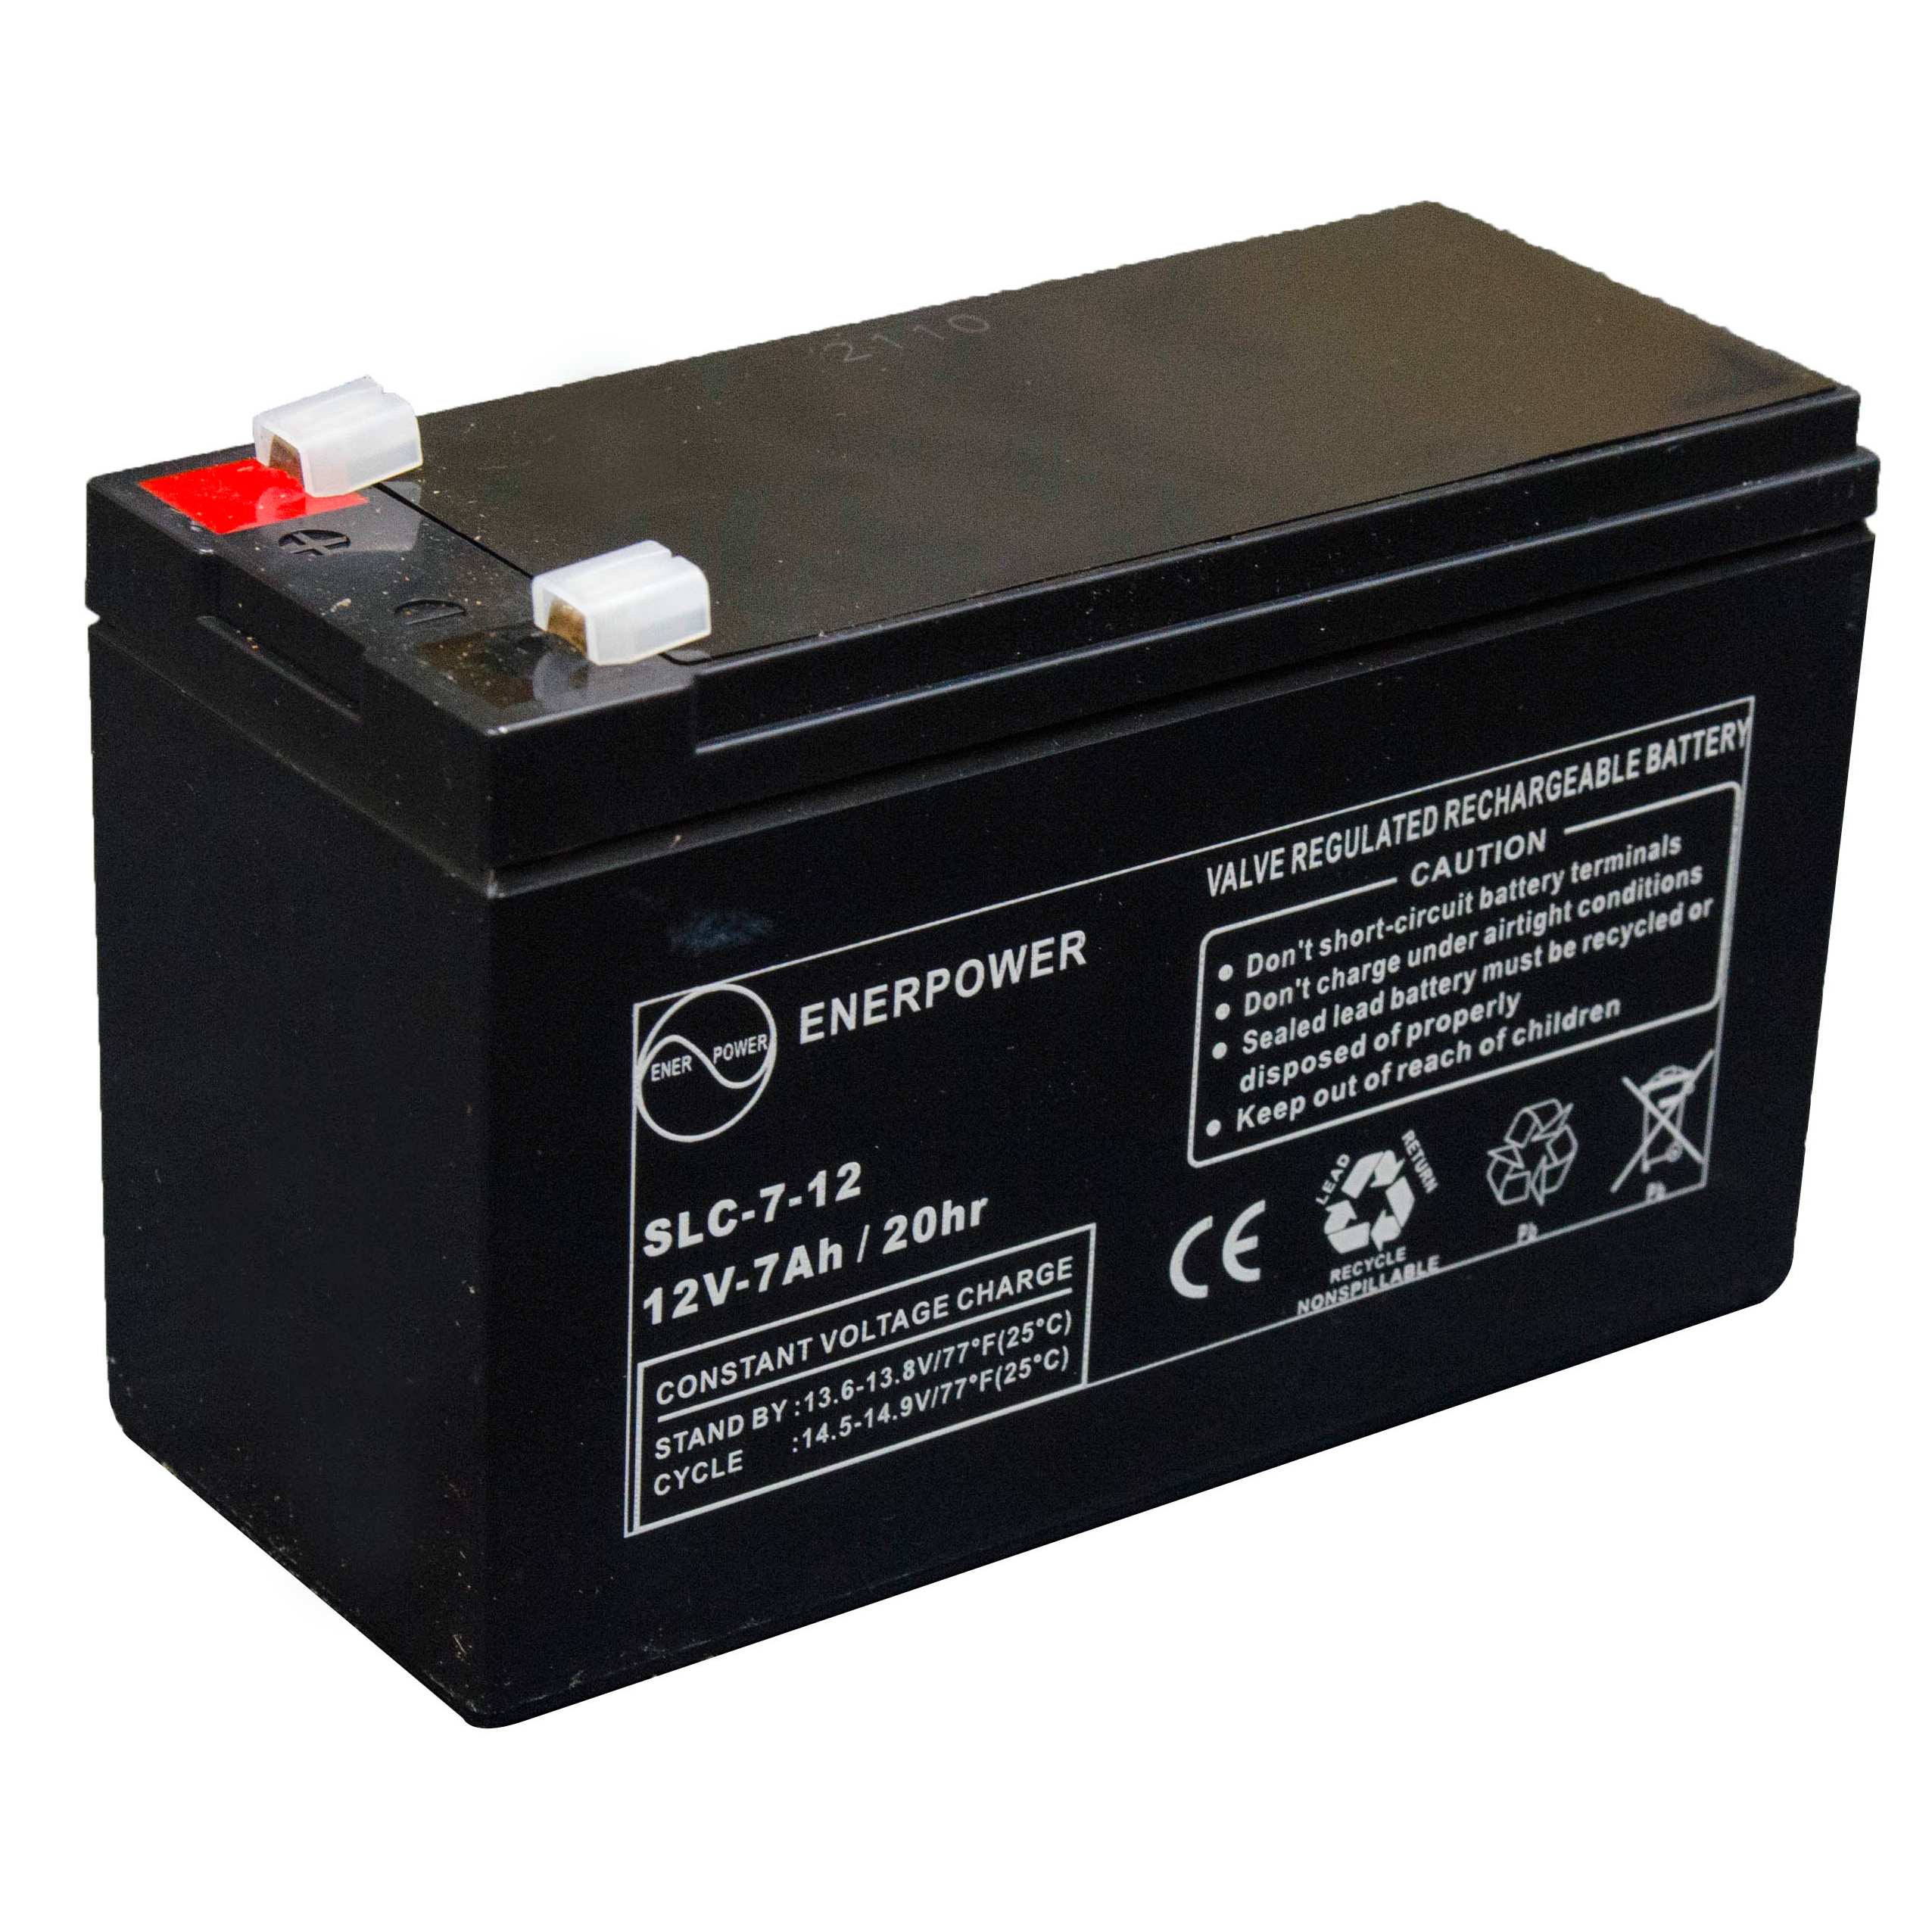 SLC7-12 12V 7Ah AGM ENERPOWER battery